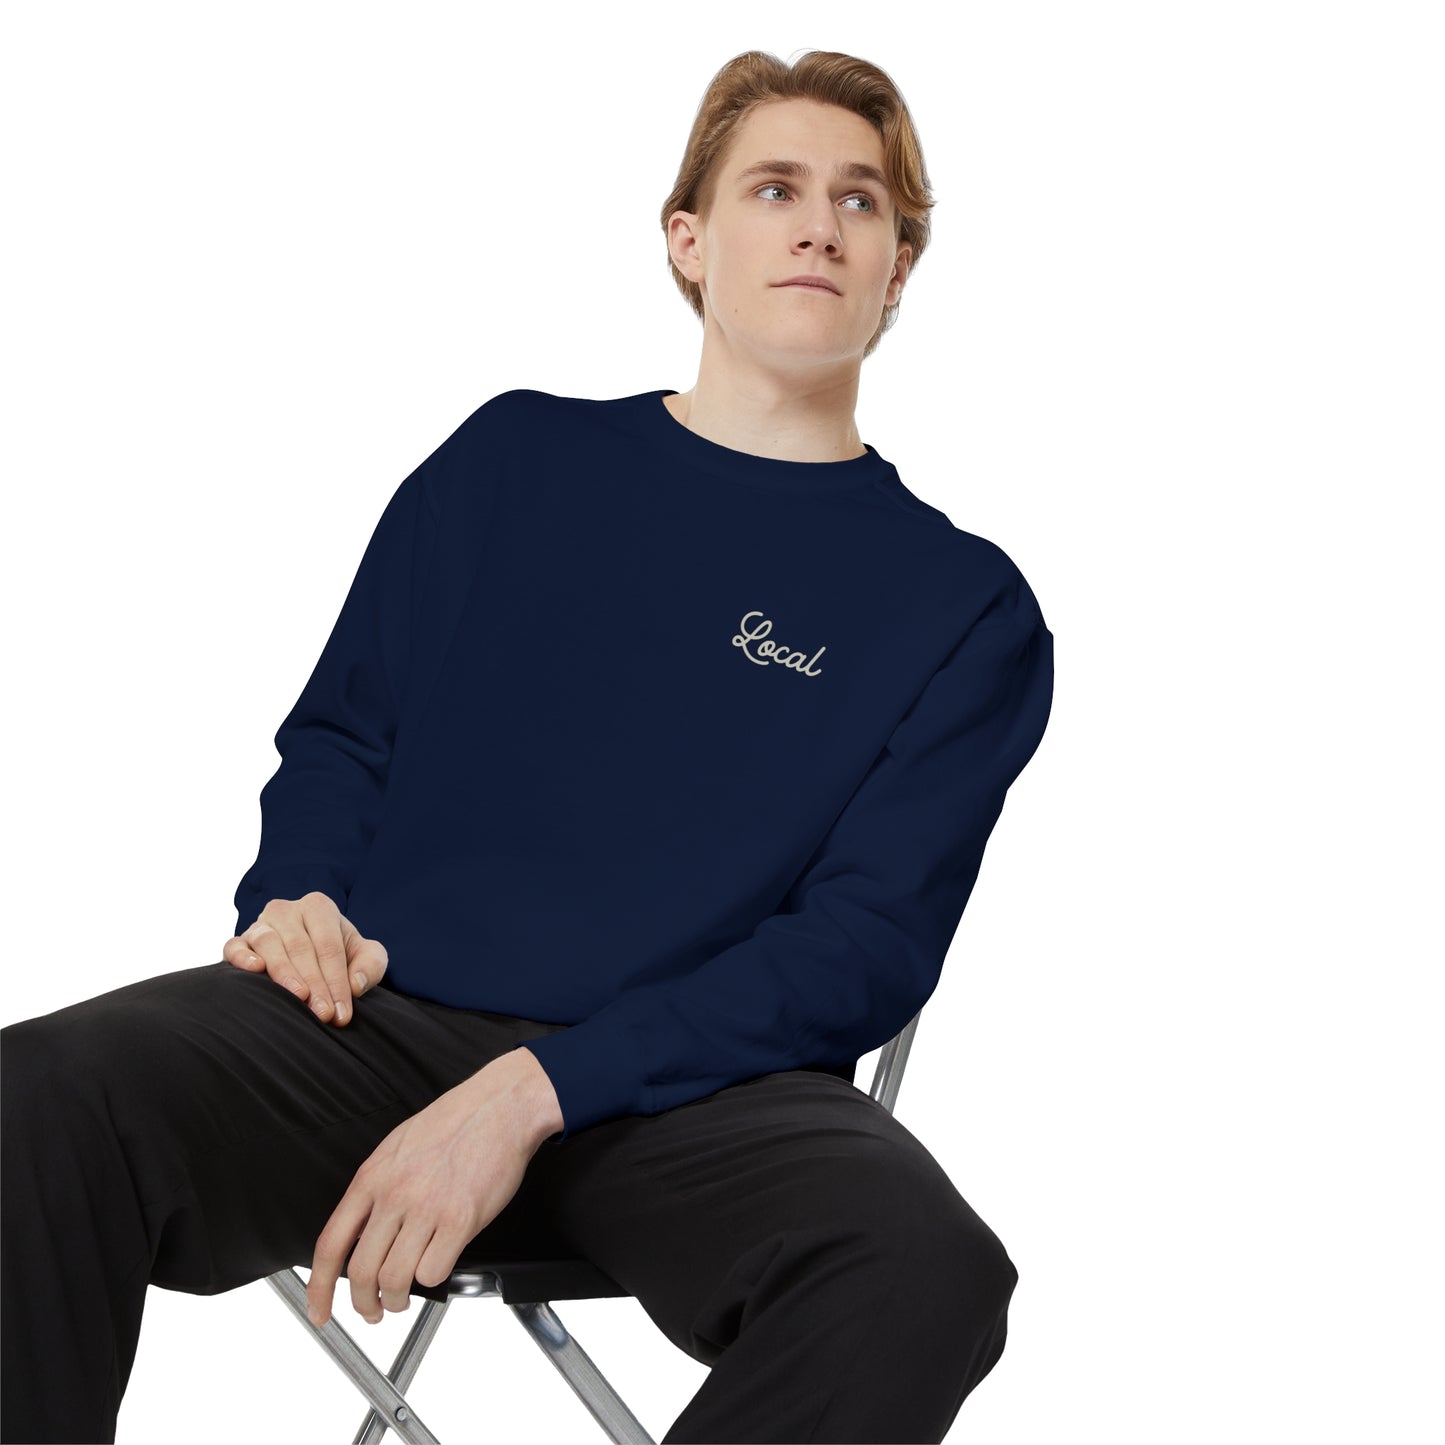 Local Script Unisex Garment-Dyed Sweatshirt